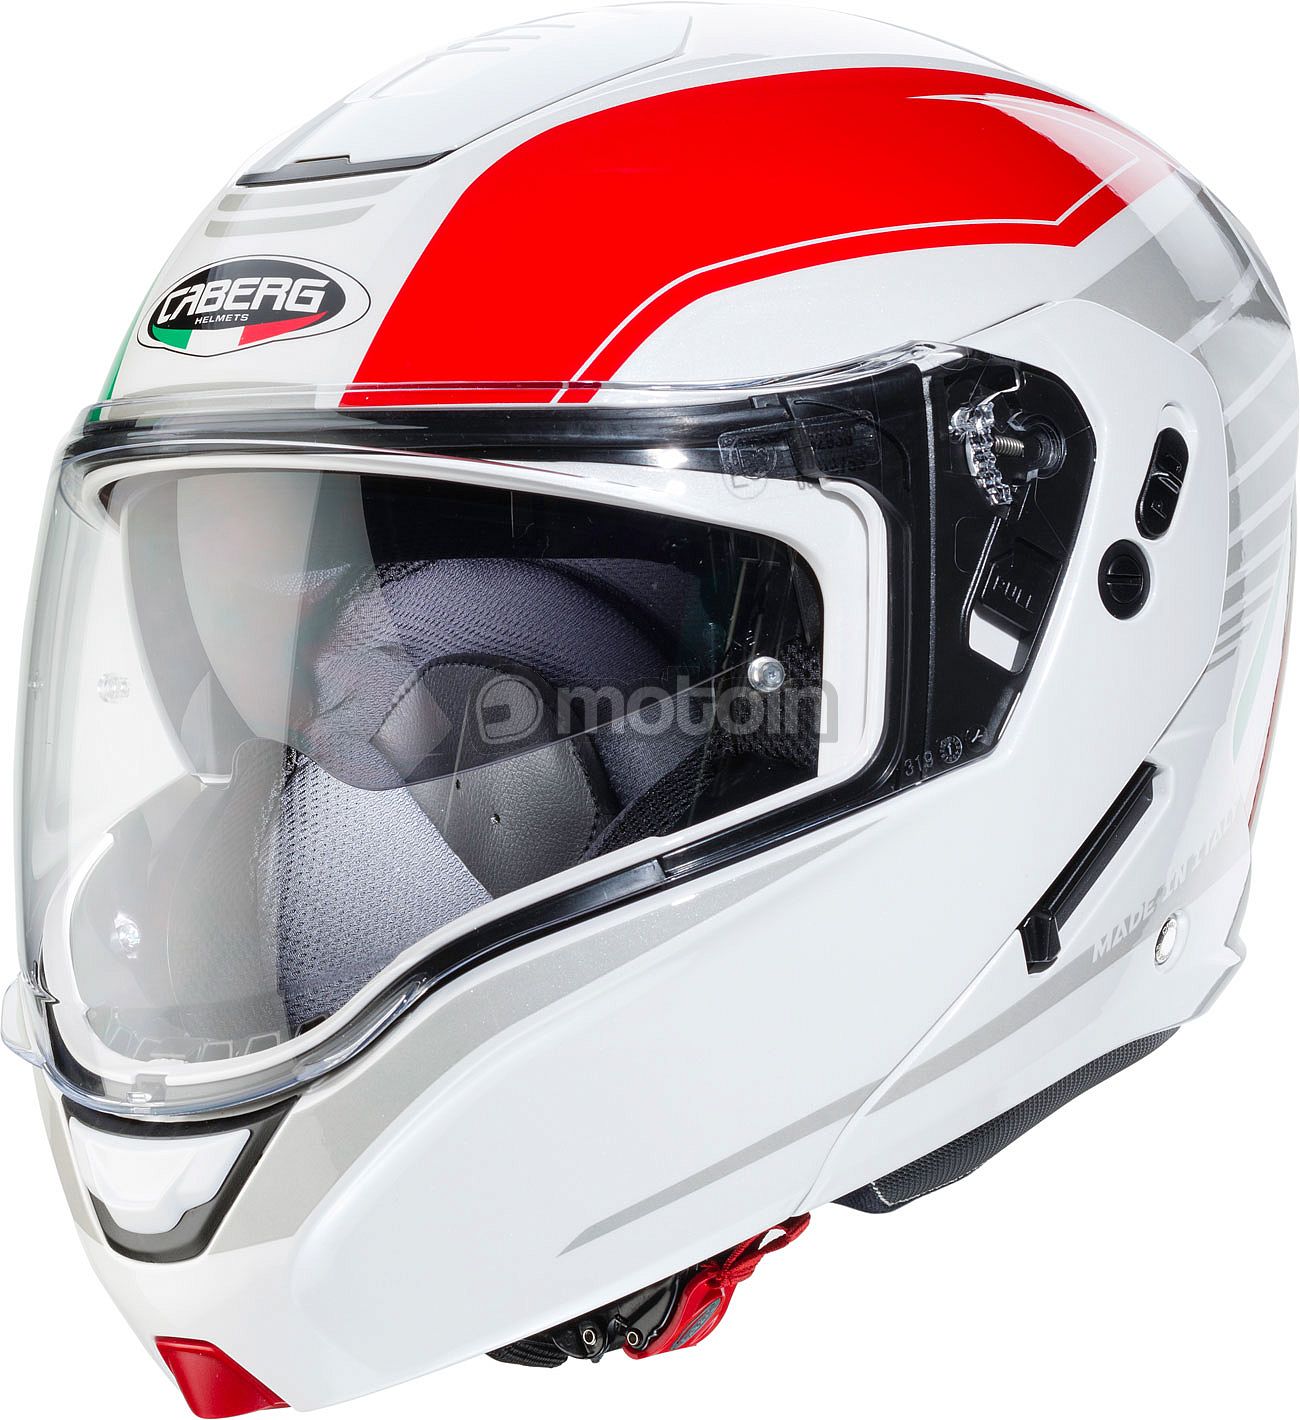 Helmet Motorbike 22-05 Double Sun Visor Graphic A-Pro White Red L